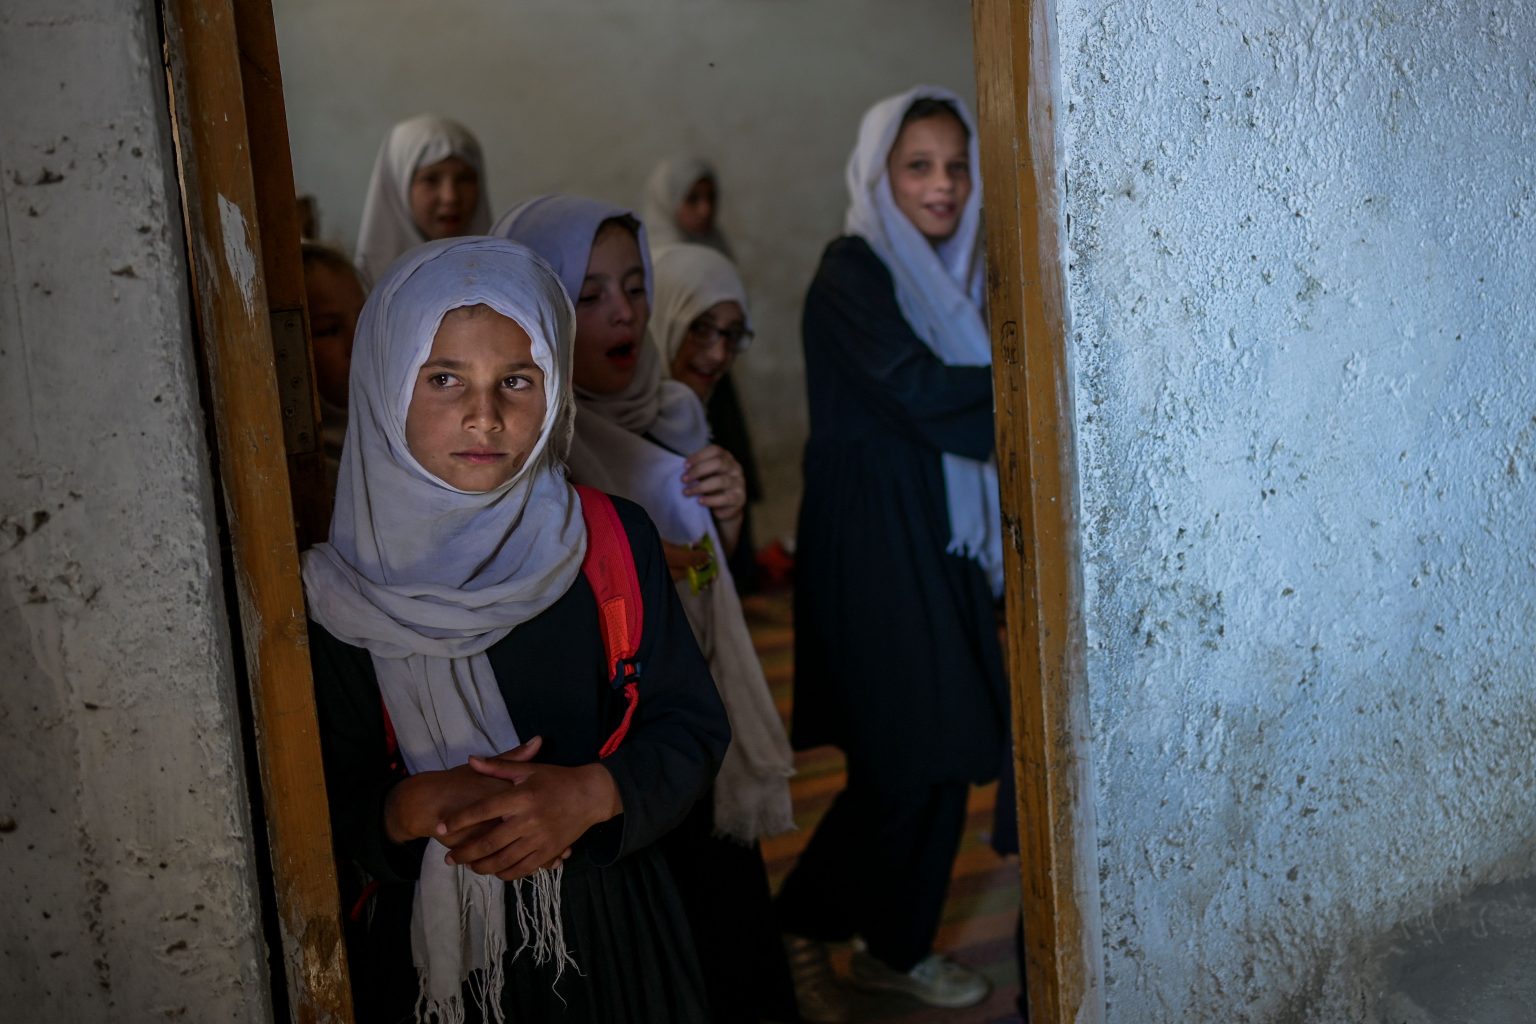 kabul - Afghanistan: ragazzine in una scuola